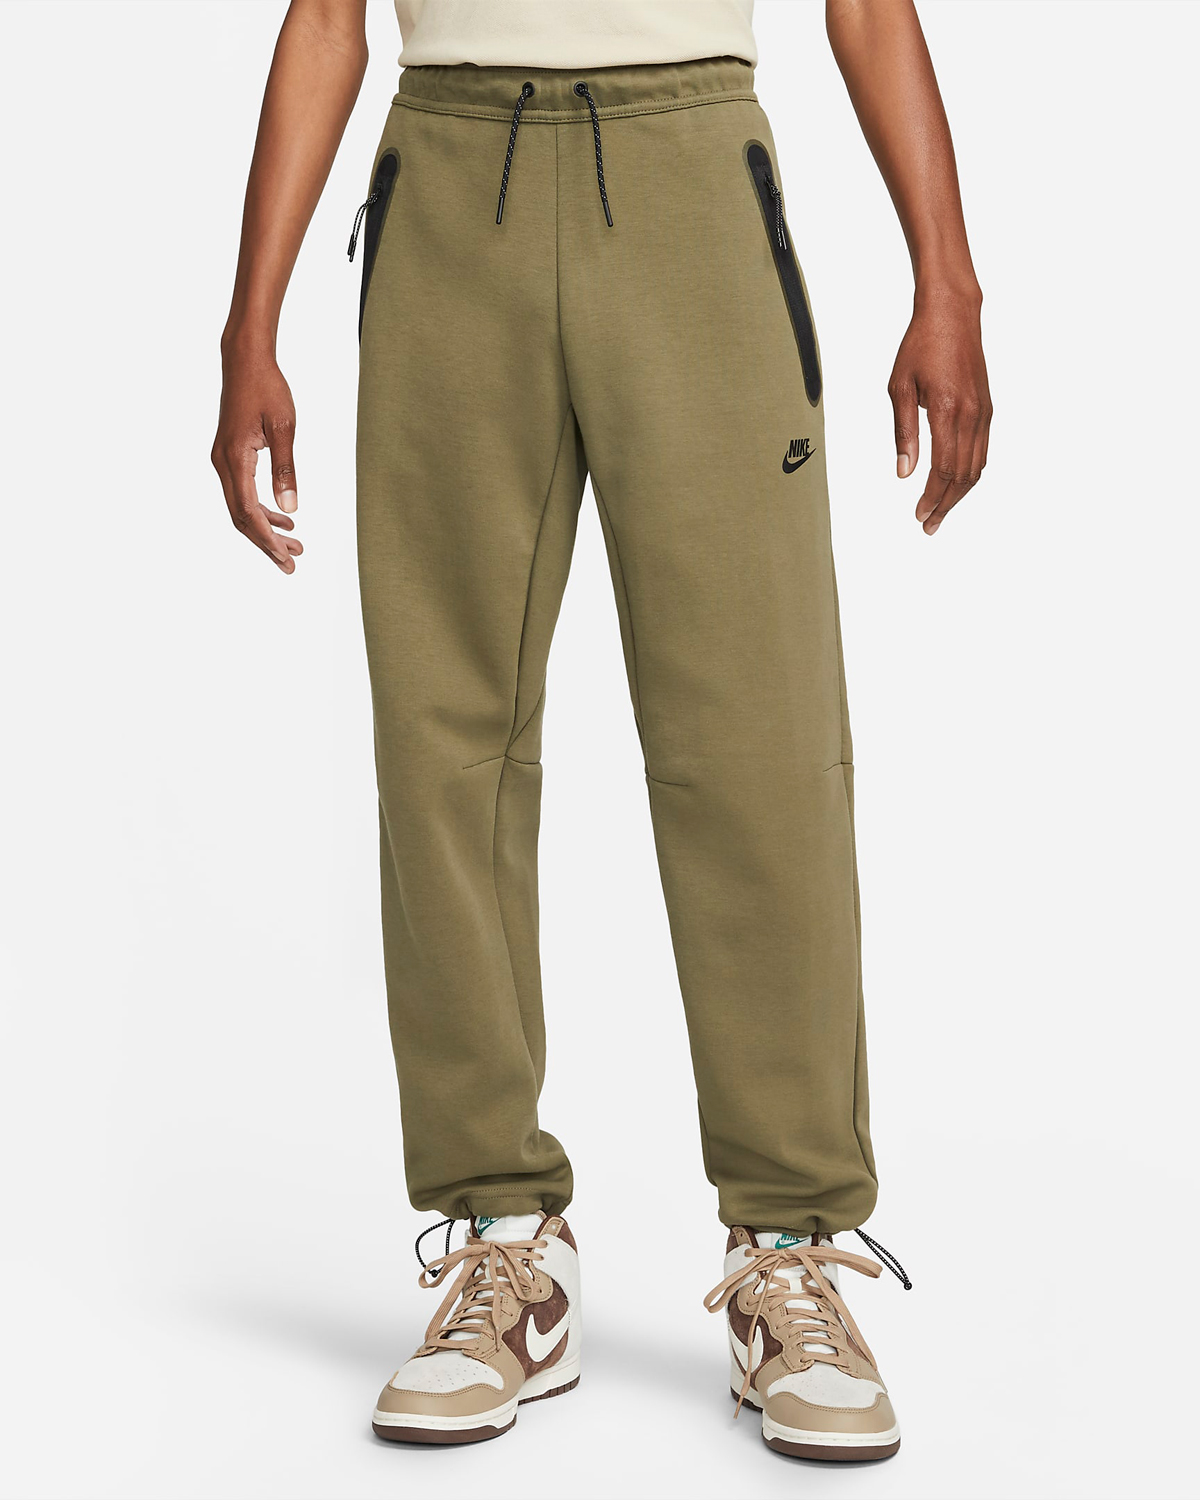 Nike-Tech-Fleece-Pants-Medium-Olive-1